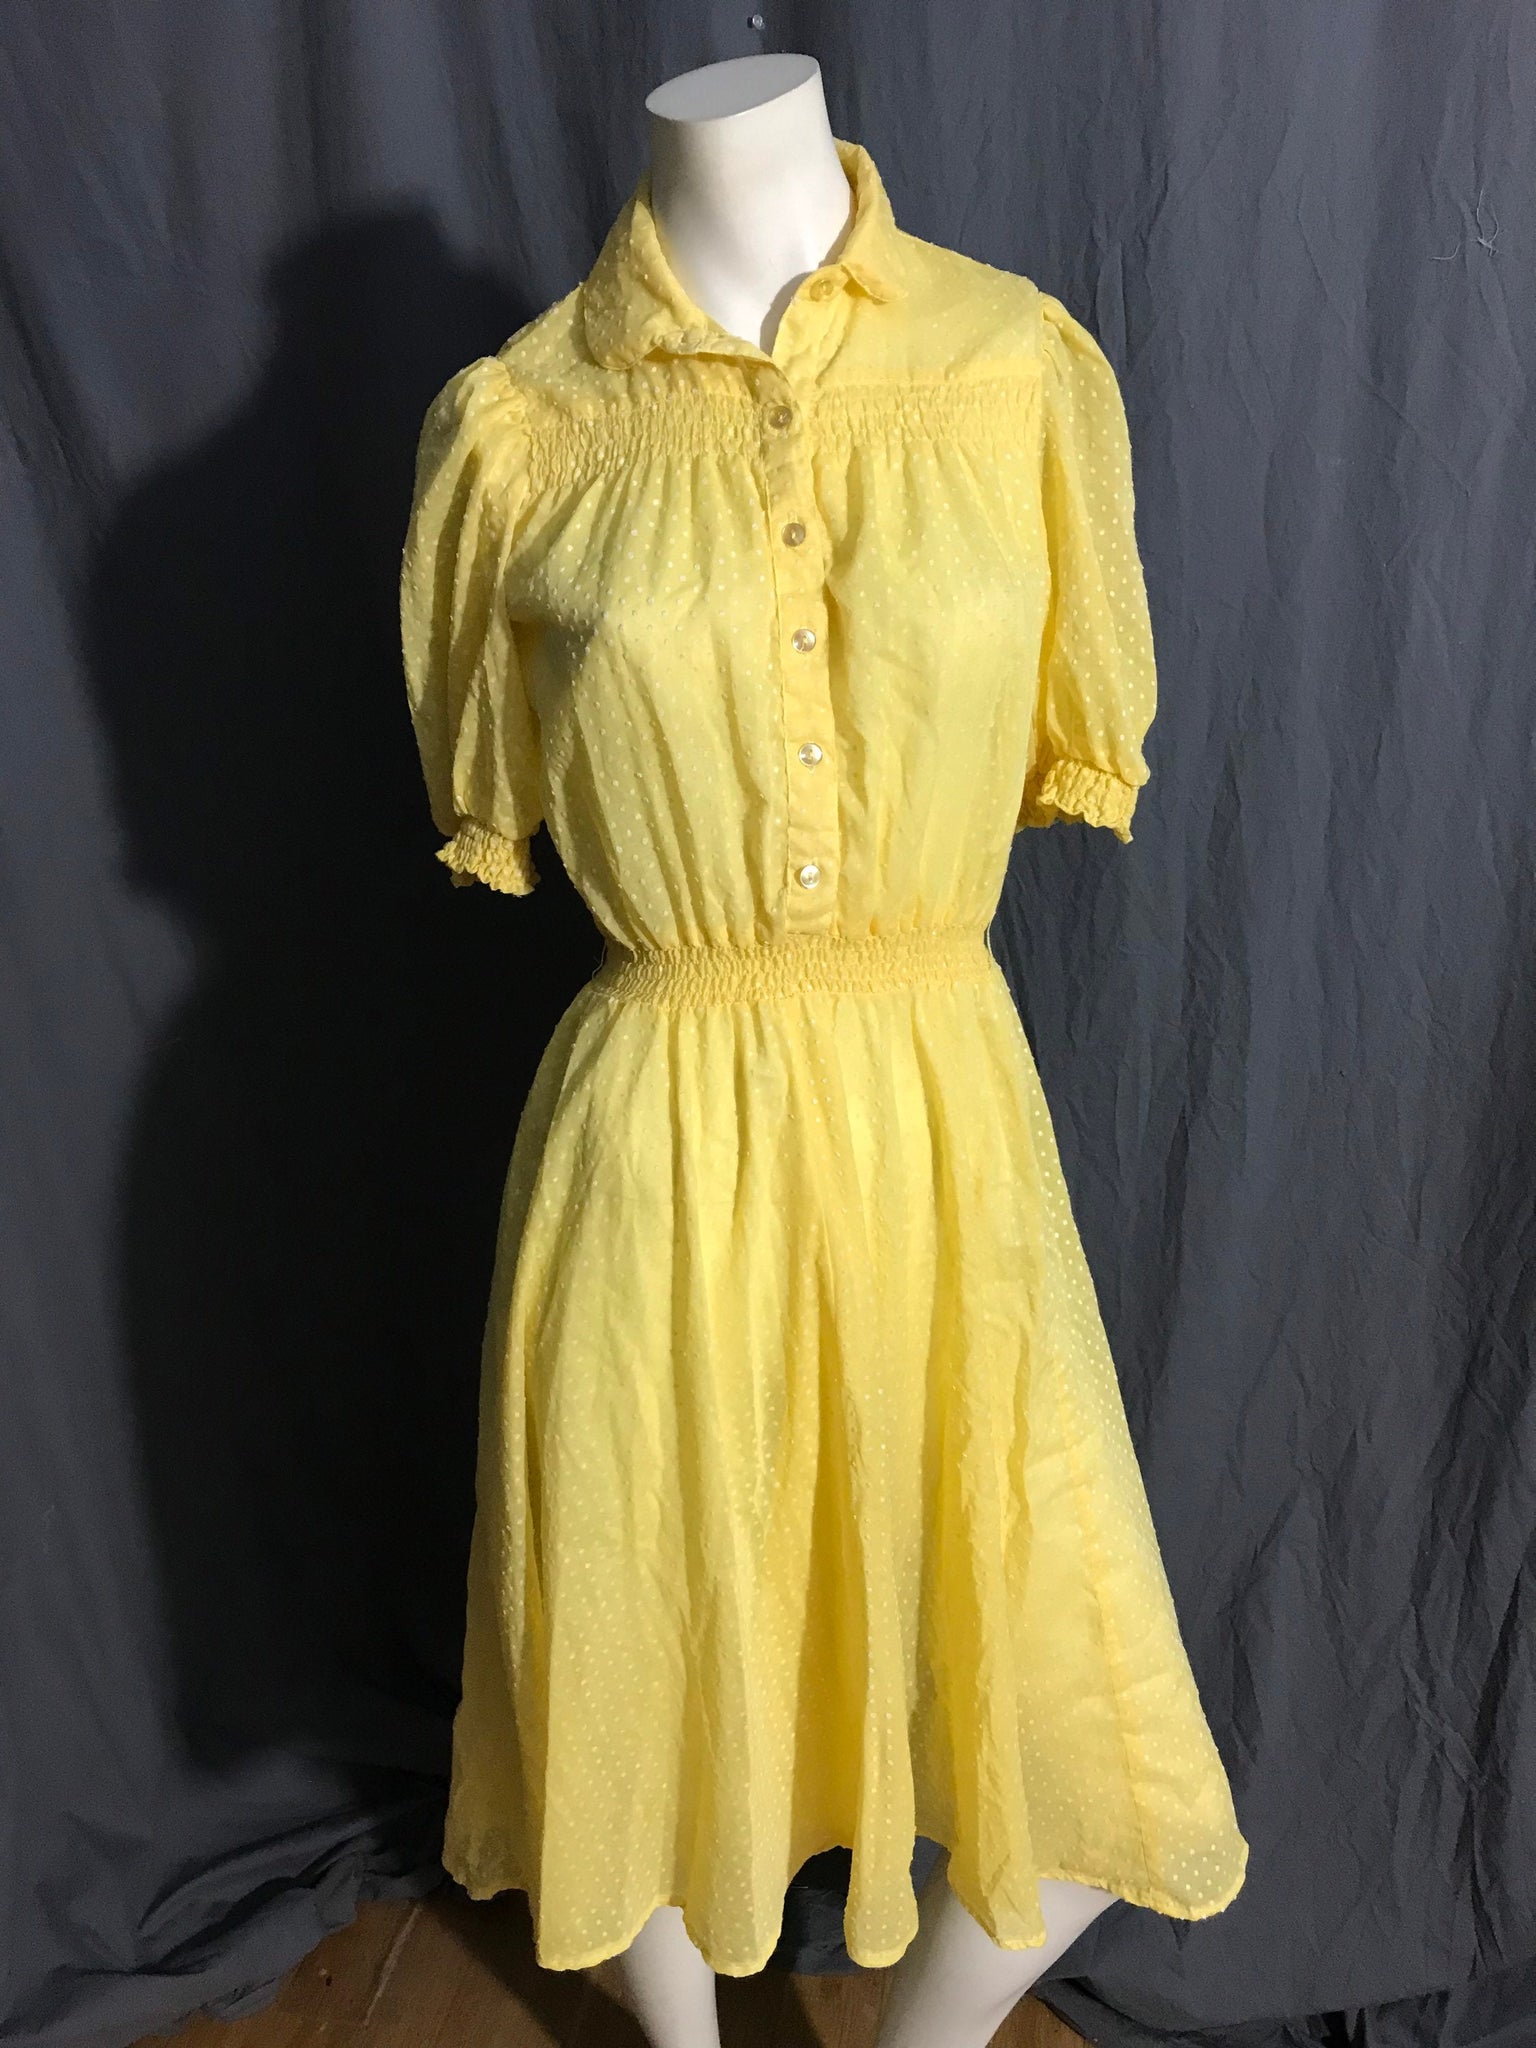 Vintage 1970’s yellow polka dot sheer collared dress M